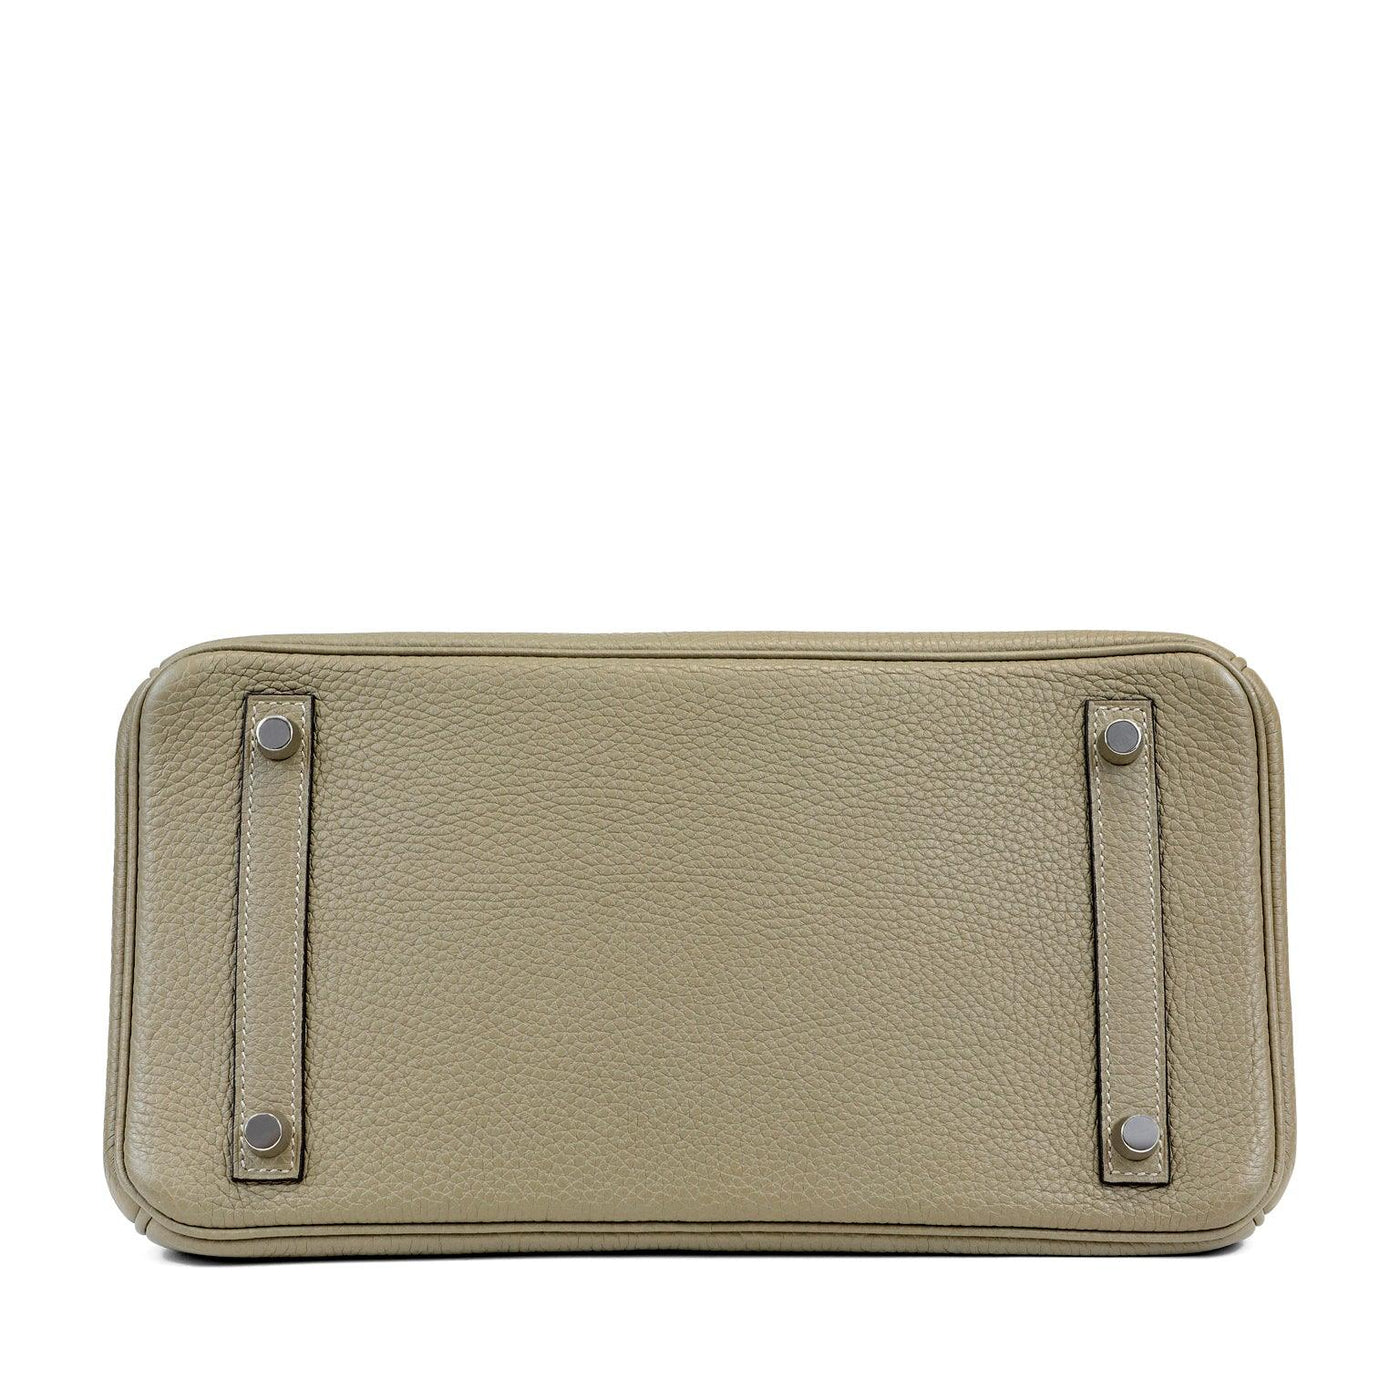 Hermes 30cm Sage Togo Leather w/ Palladium Hardware - Only Authentics